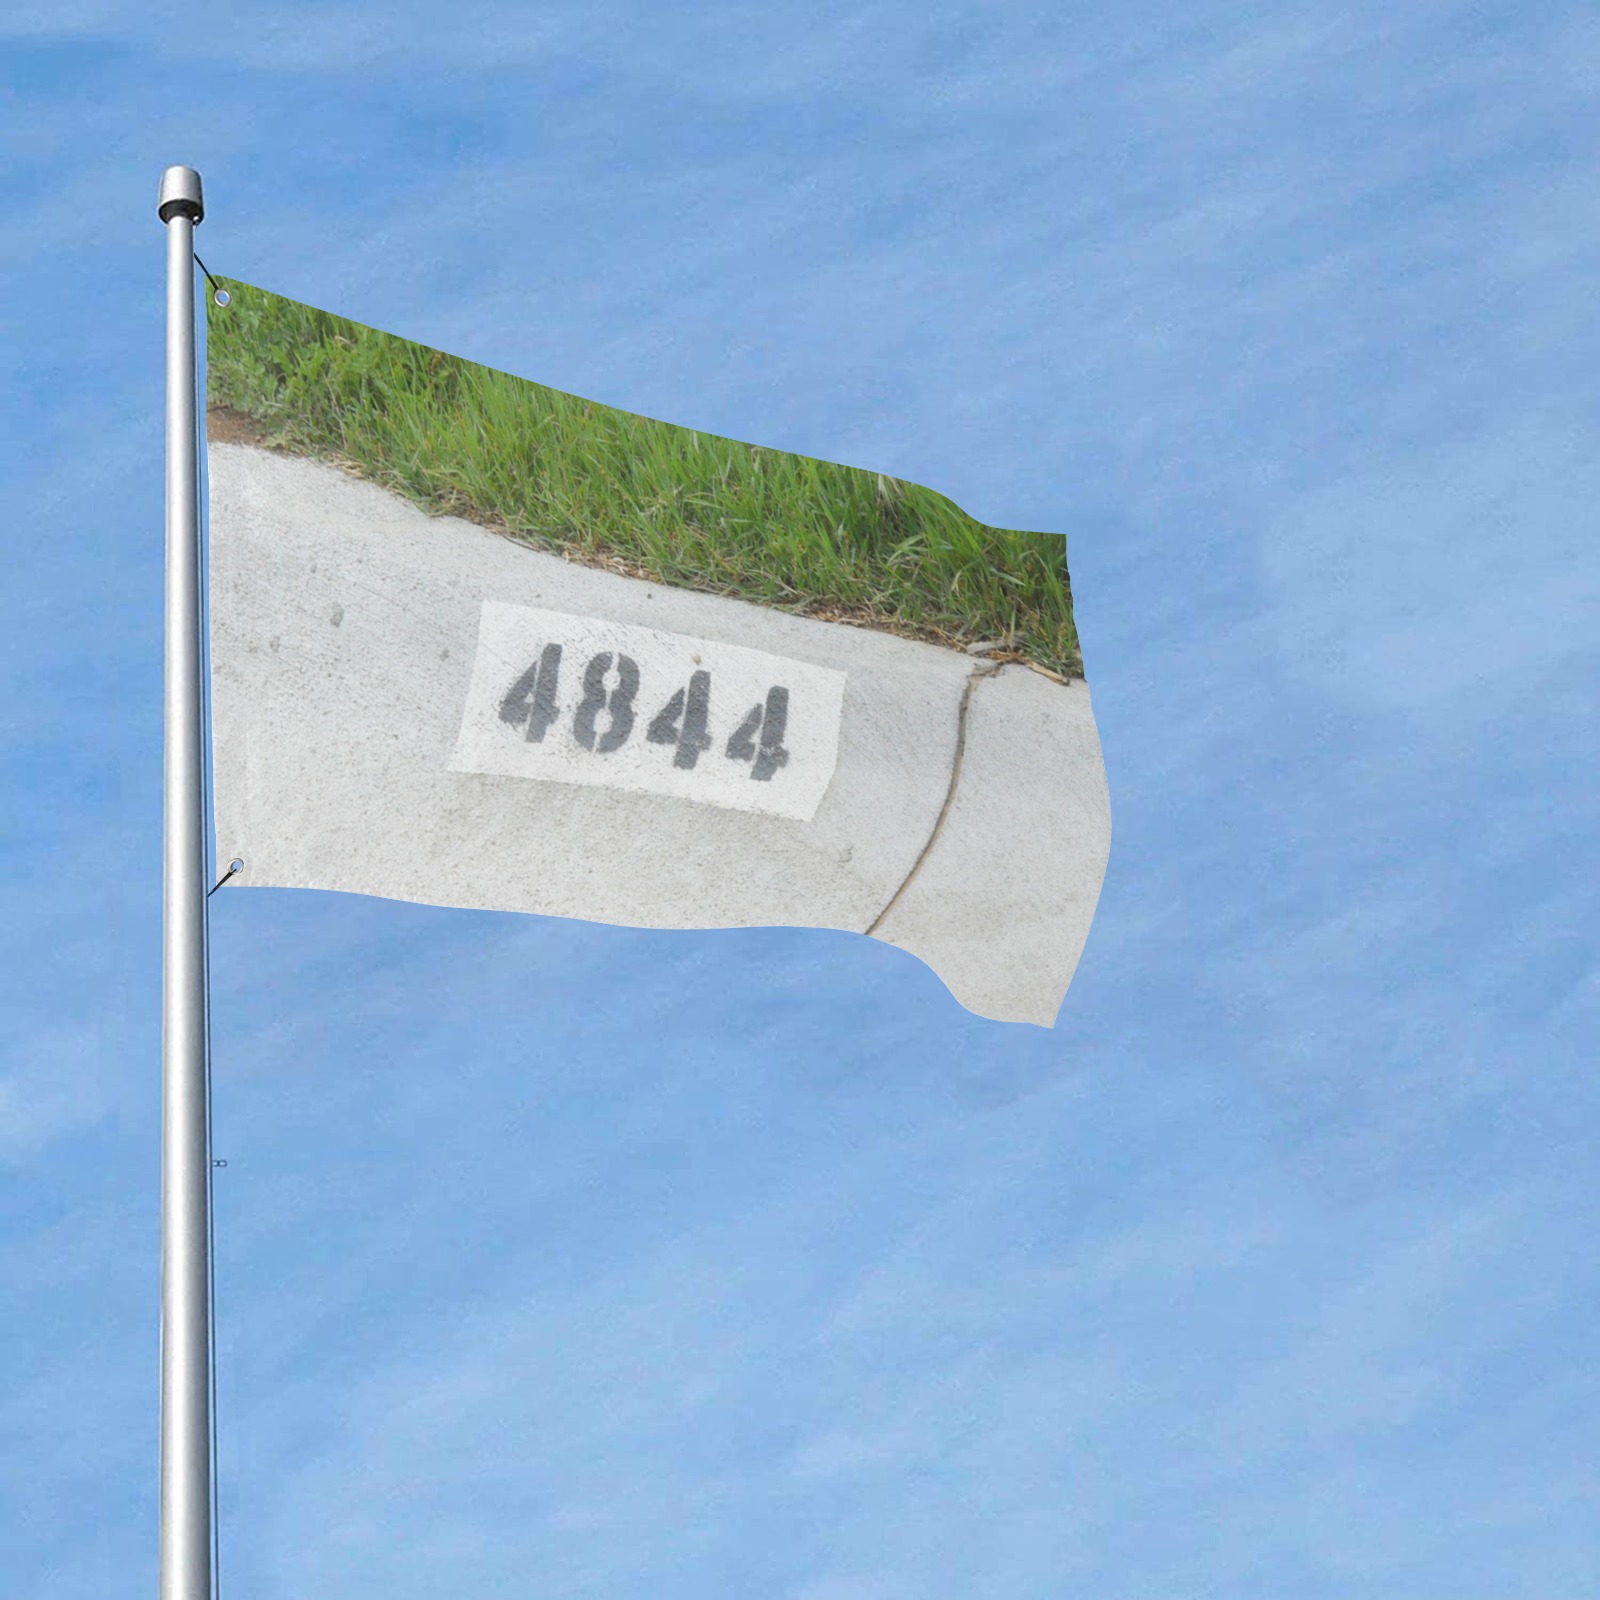 Street Number 4844 Custom Flag 1.5x1 Ft (18"x12") (One Side)